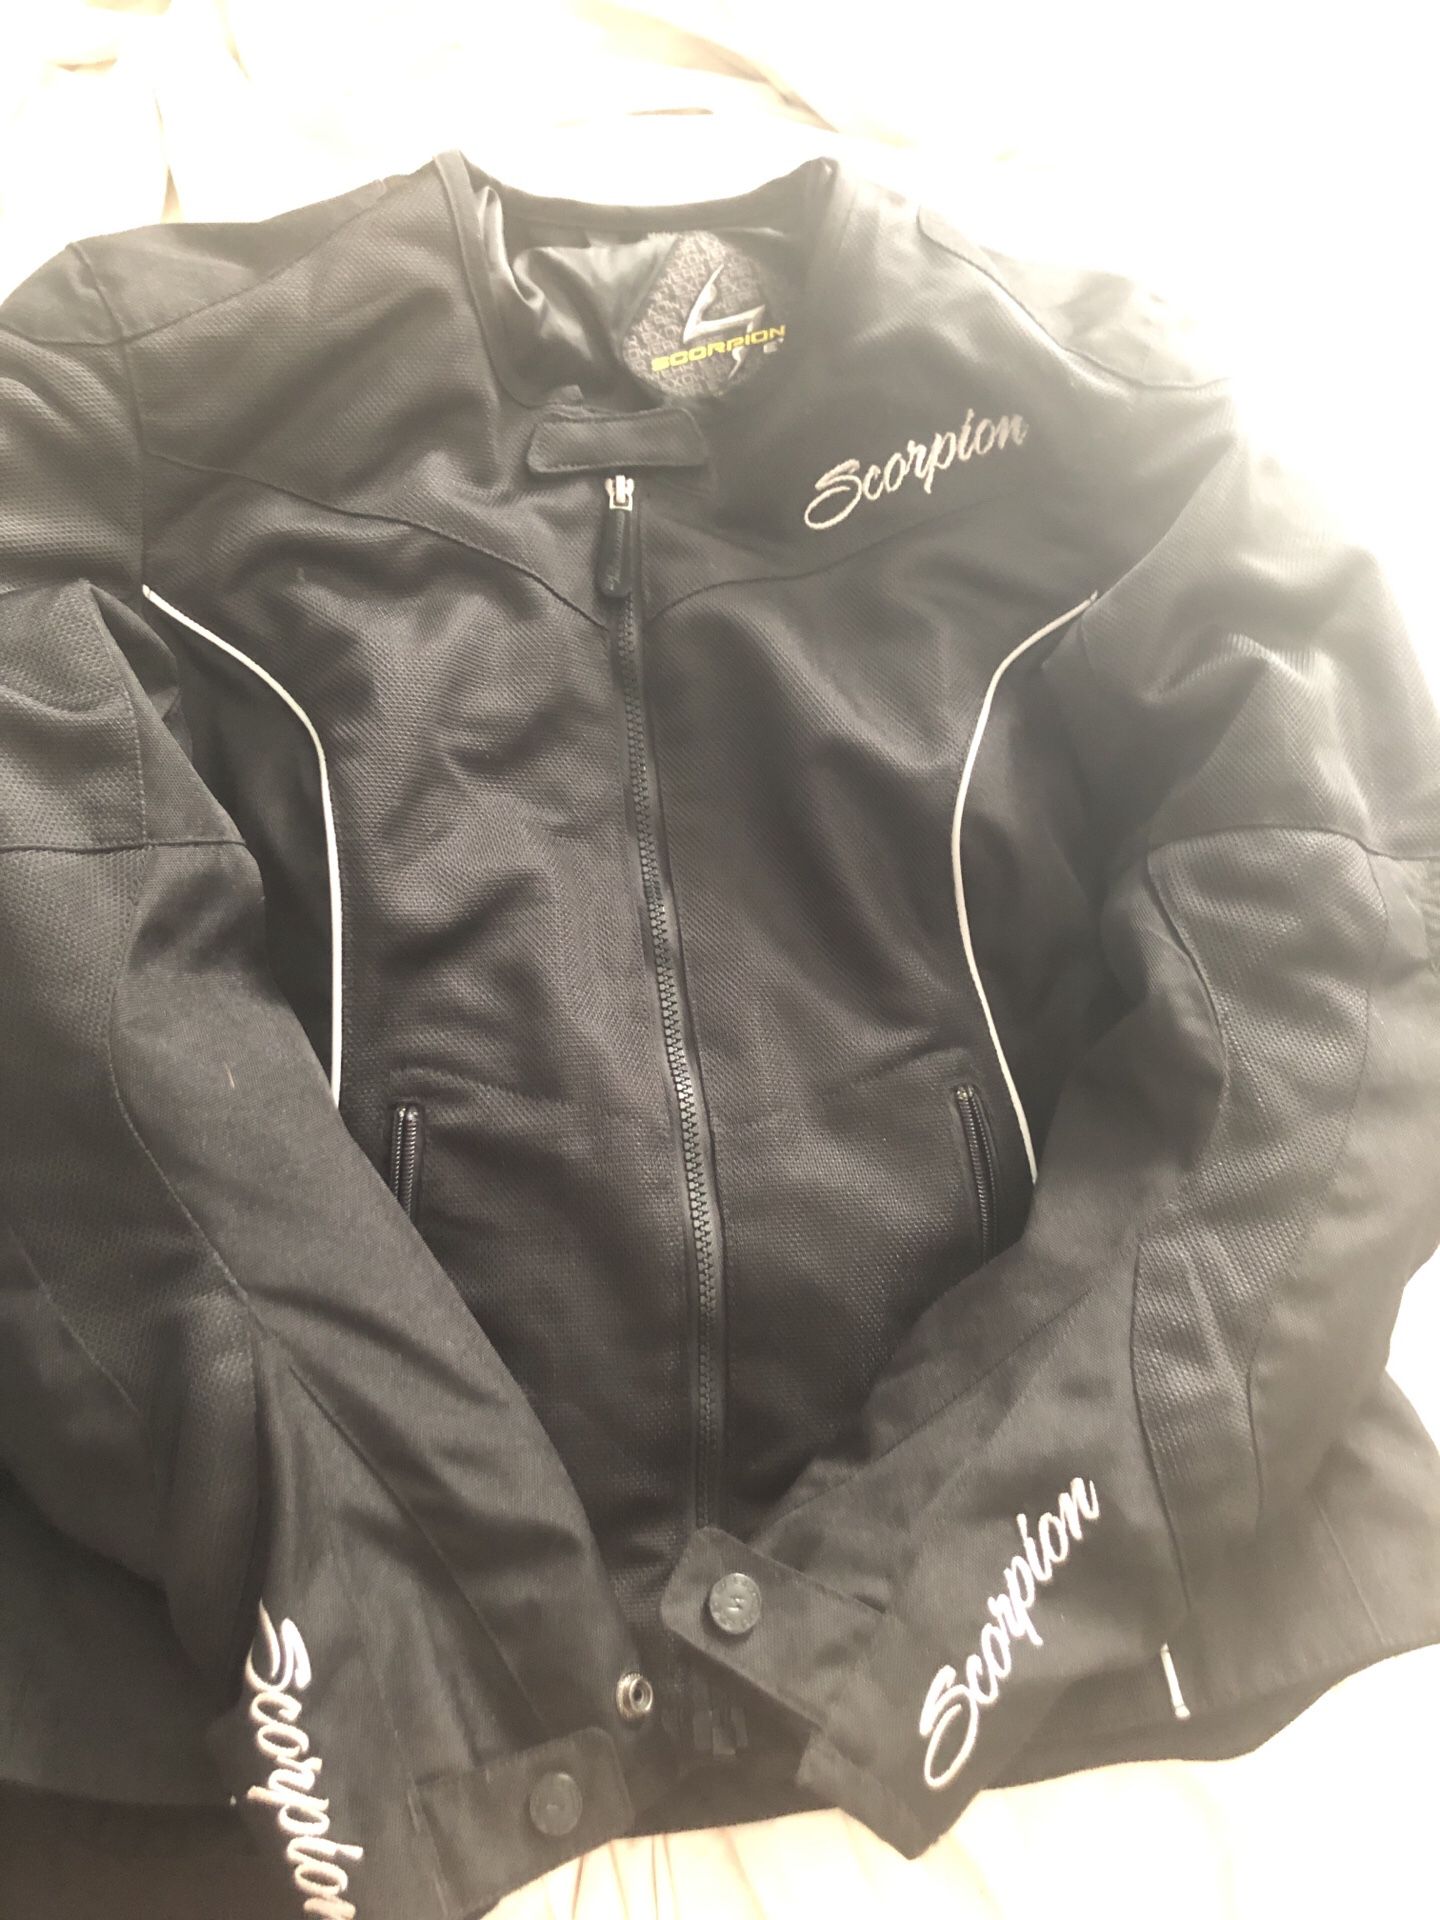 Women’s scorpion motorcycle jacket $40